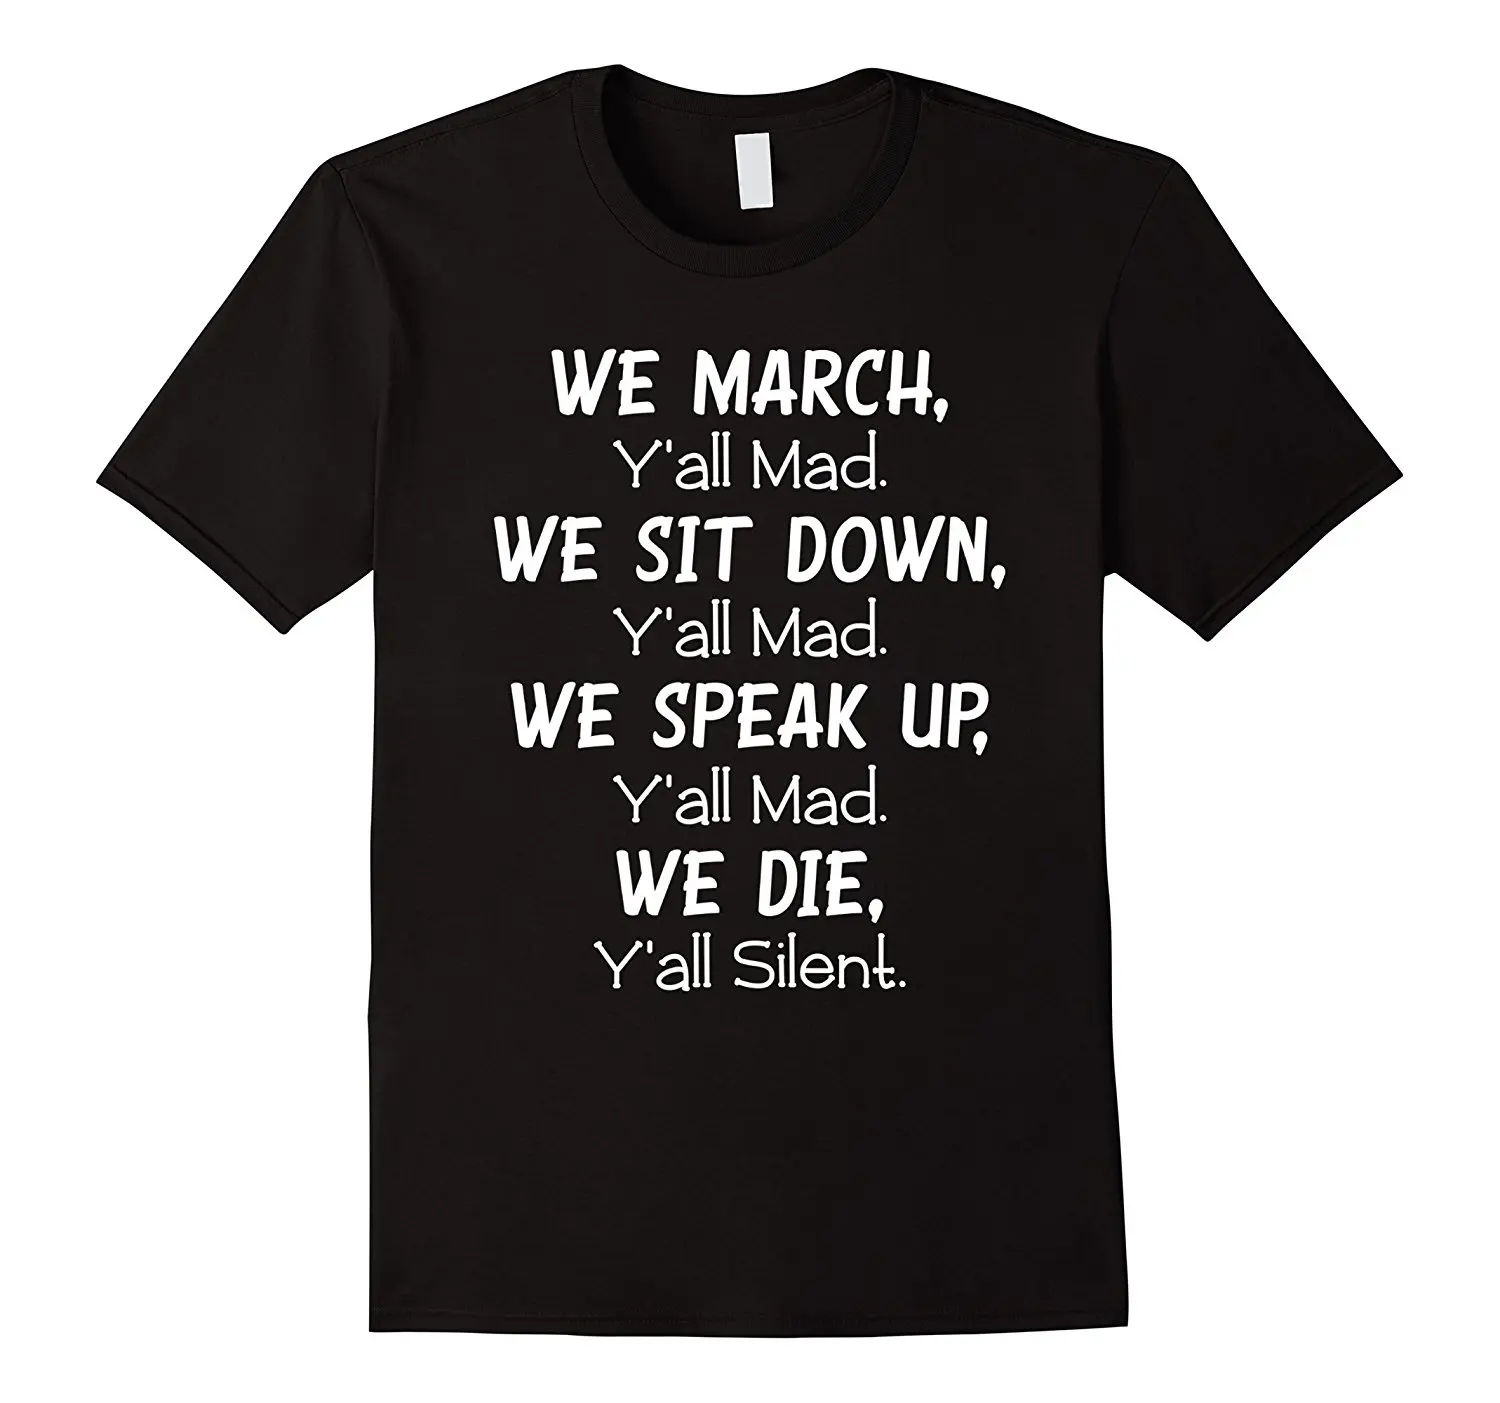 

Funny Design We March, Ya'll Mad. "Black Lives Matter" Slogan T-Shirt. Summer Cotton O-Neck Short Sleeve Mens T Shirt New S-3XL